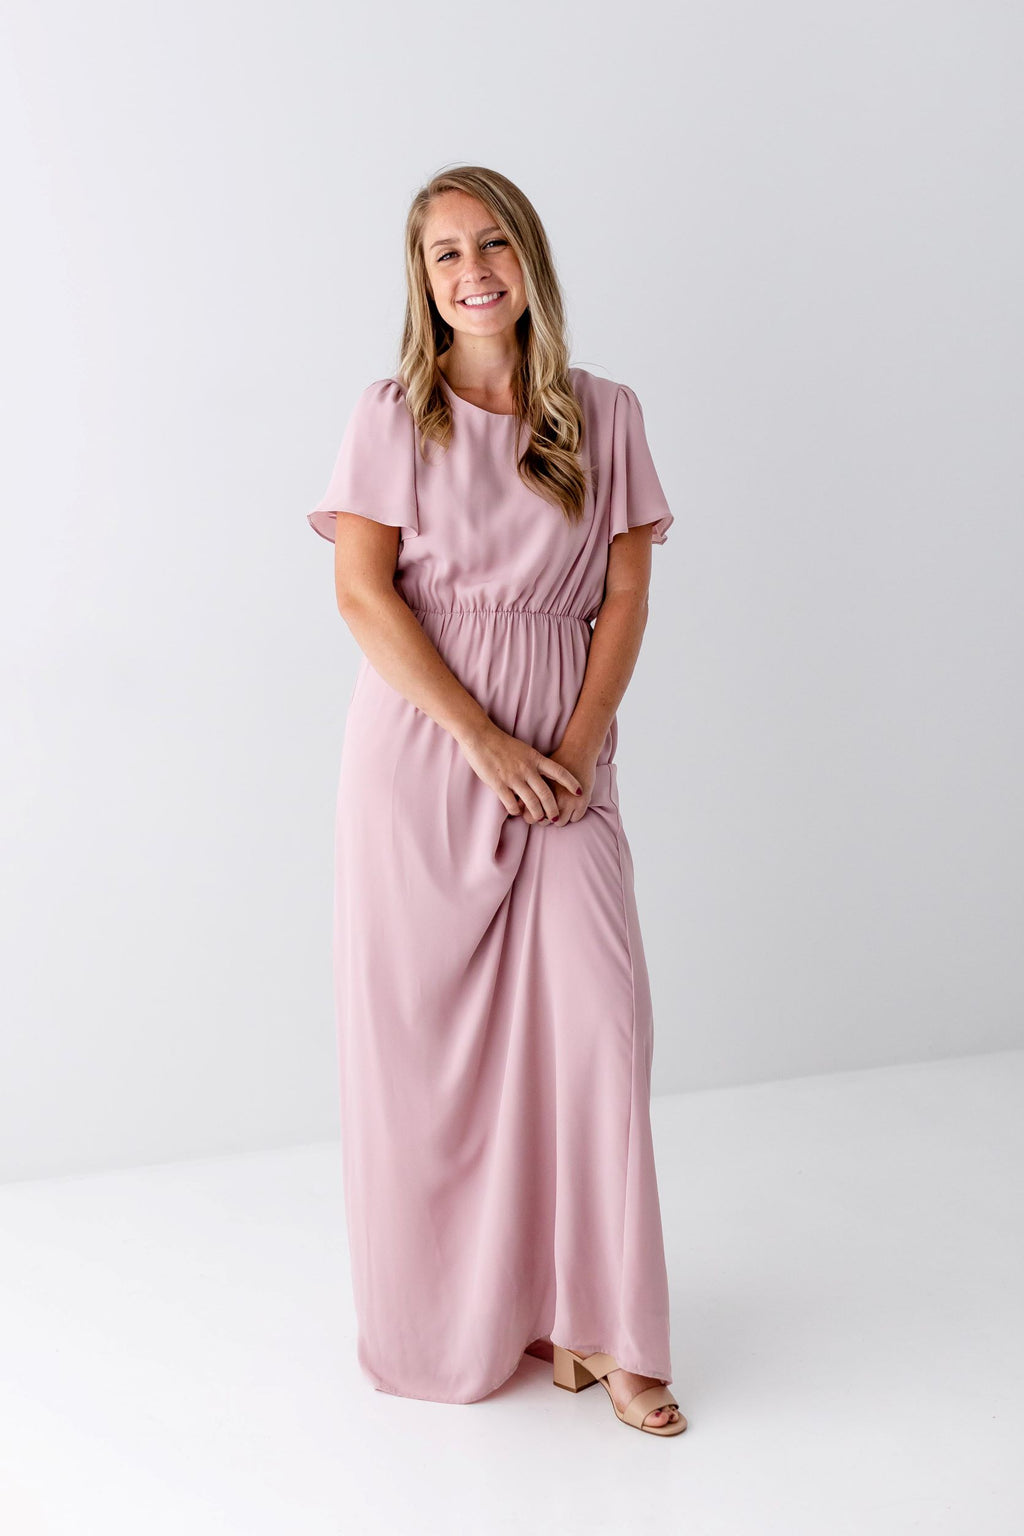 'Naomi' Chiffon Maxi Dress in Light Rose FINAL SALE